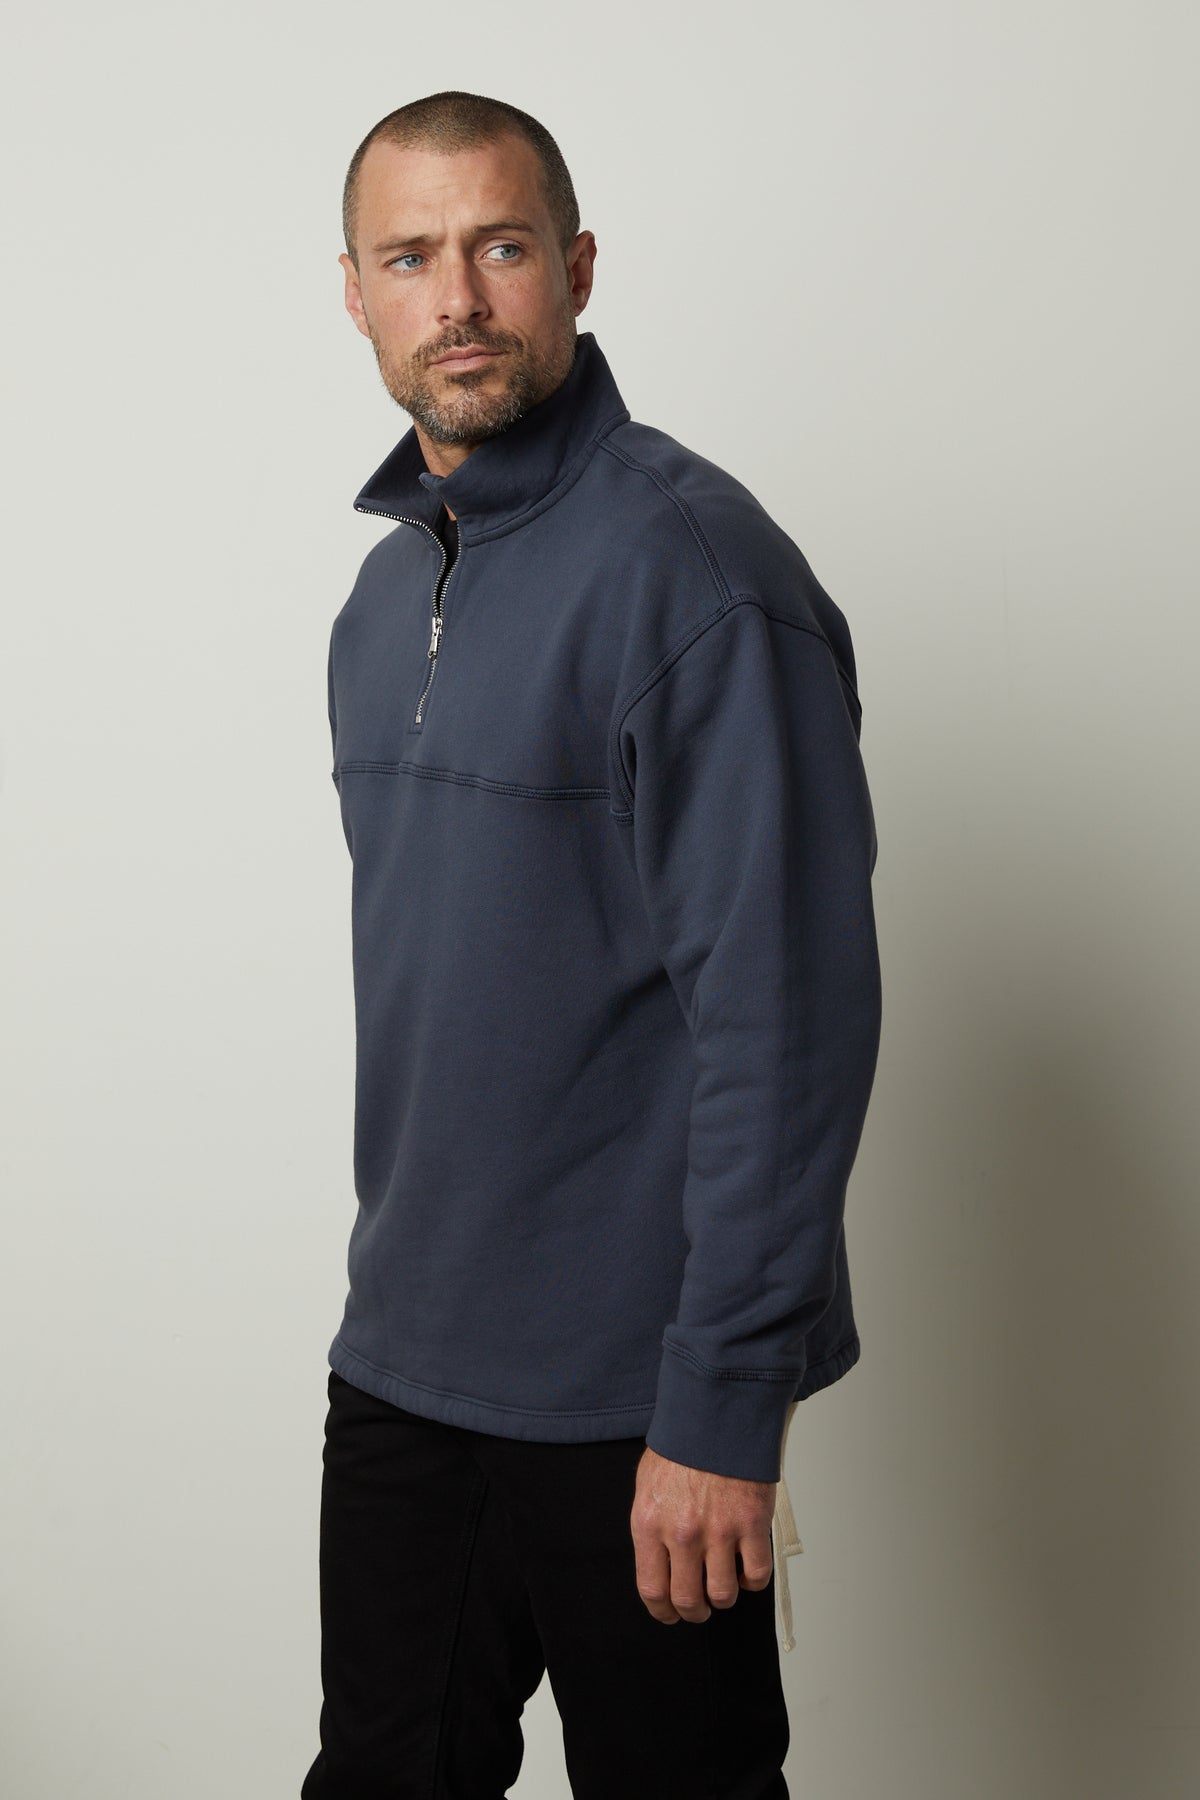 A man wearing a blue Velvet by Graham & Spencer BOSCO quarter-zip sweatshirt and black pants.-35782782648513